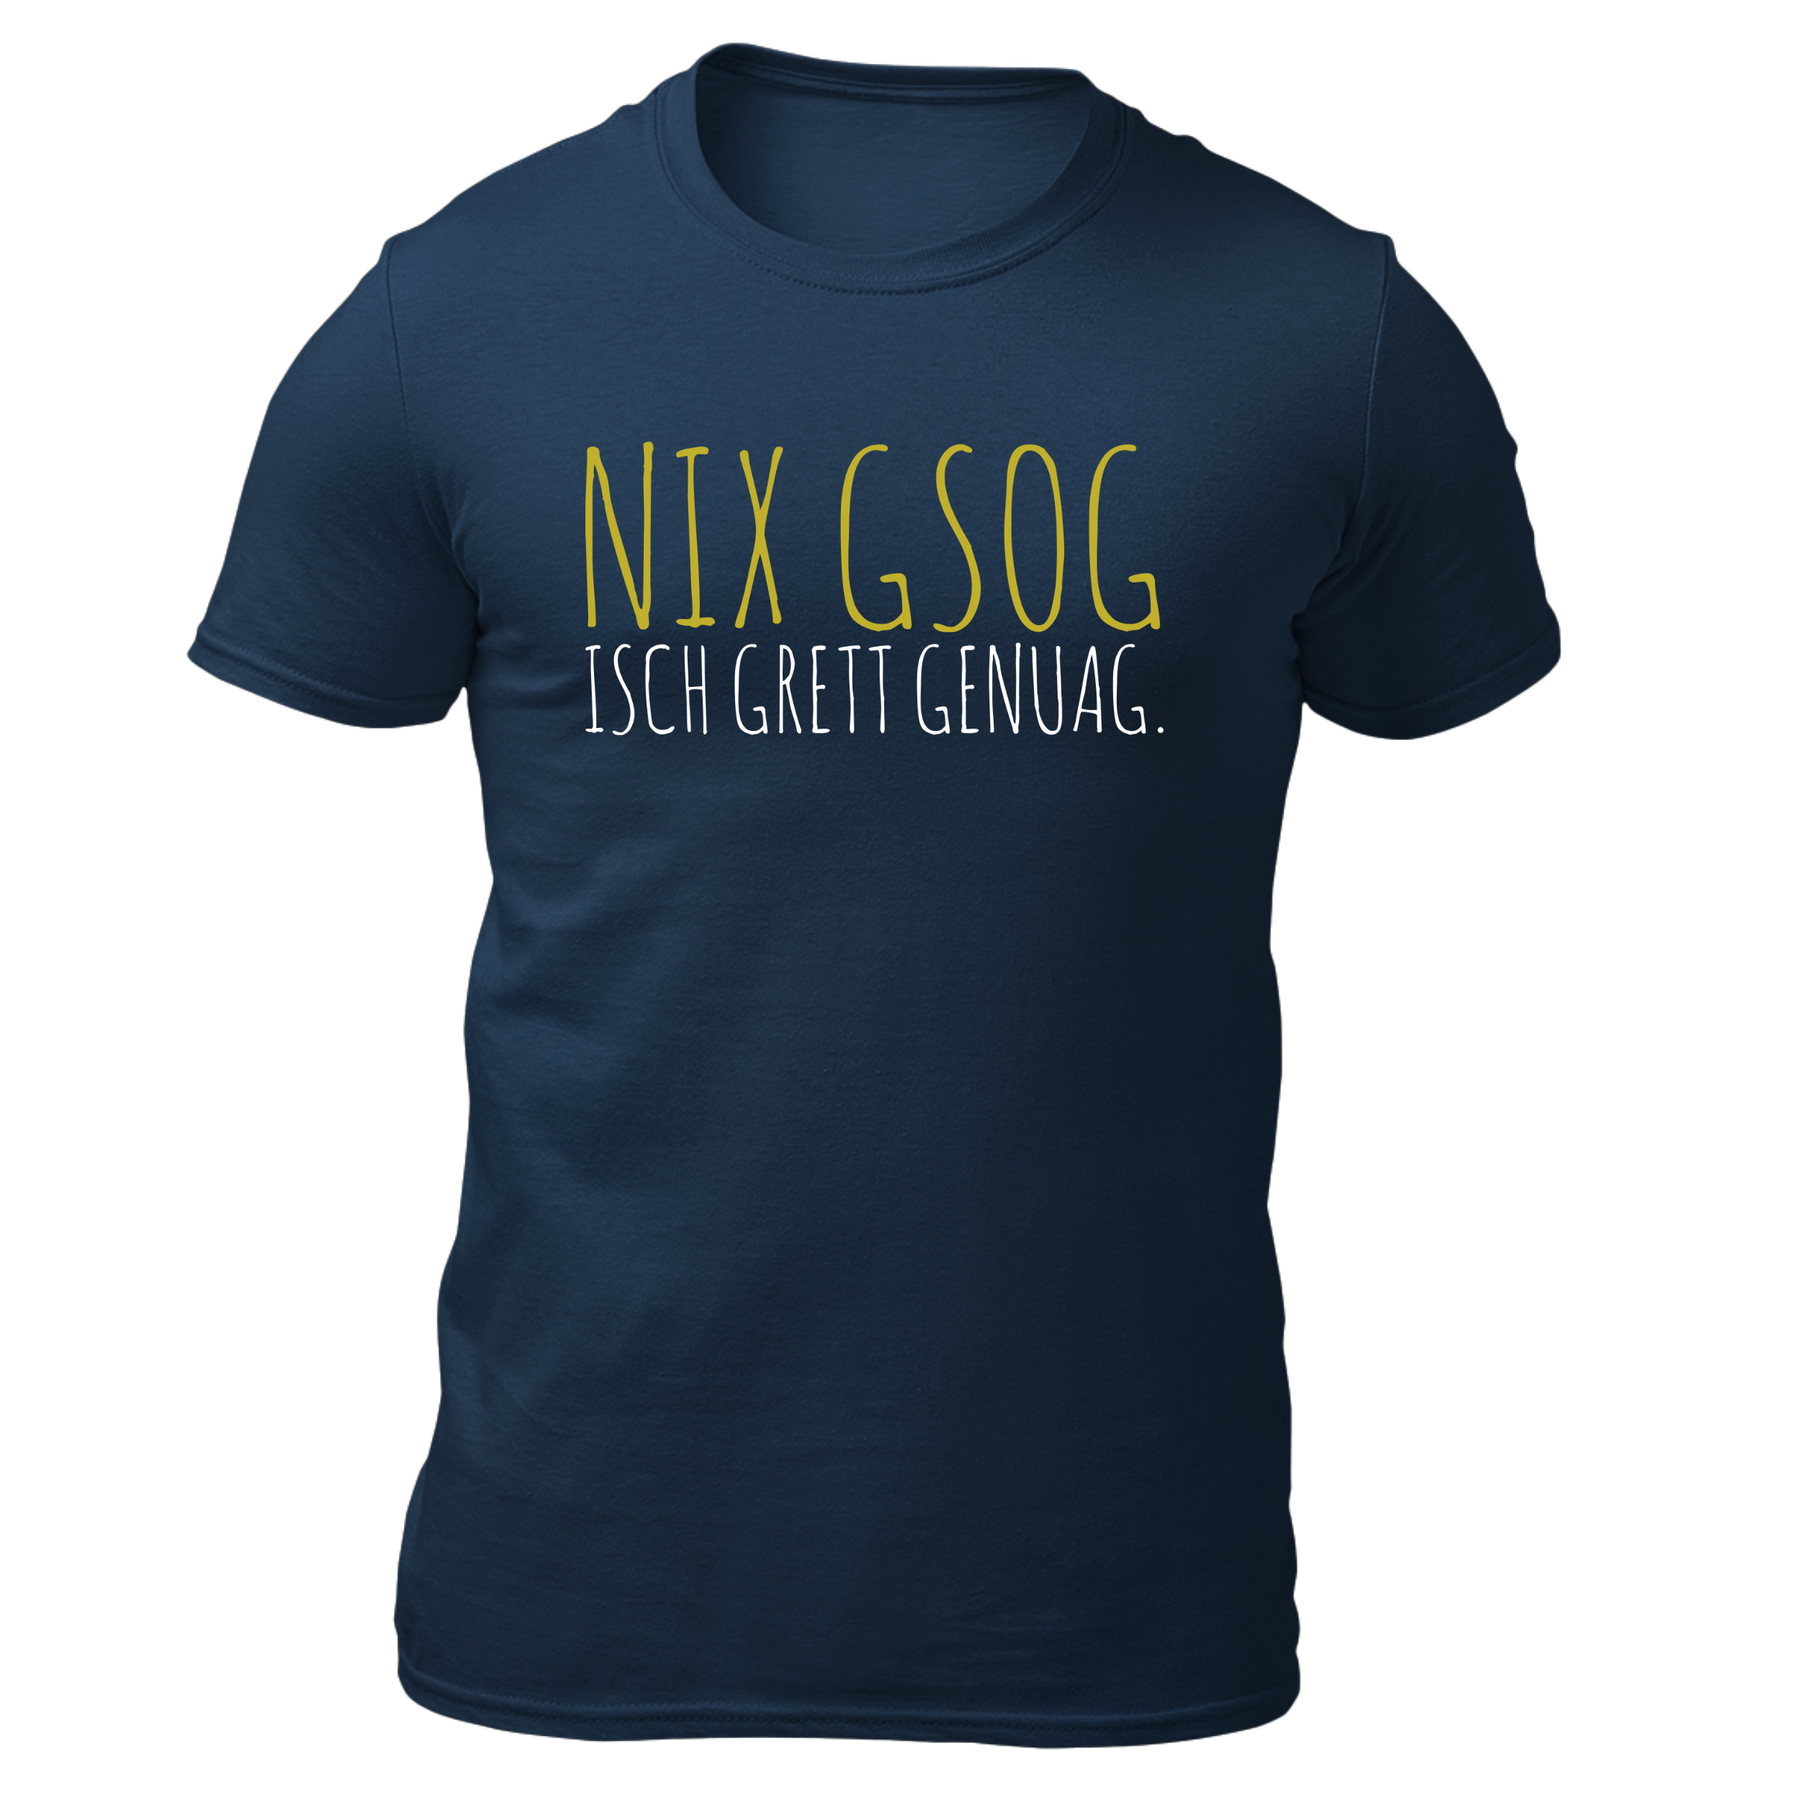 Nix gsog isch grett genuag - Herren Shirt Bio - Navy / S - Shirts & Tops